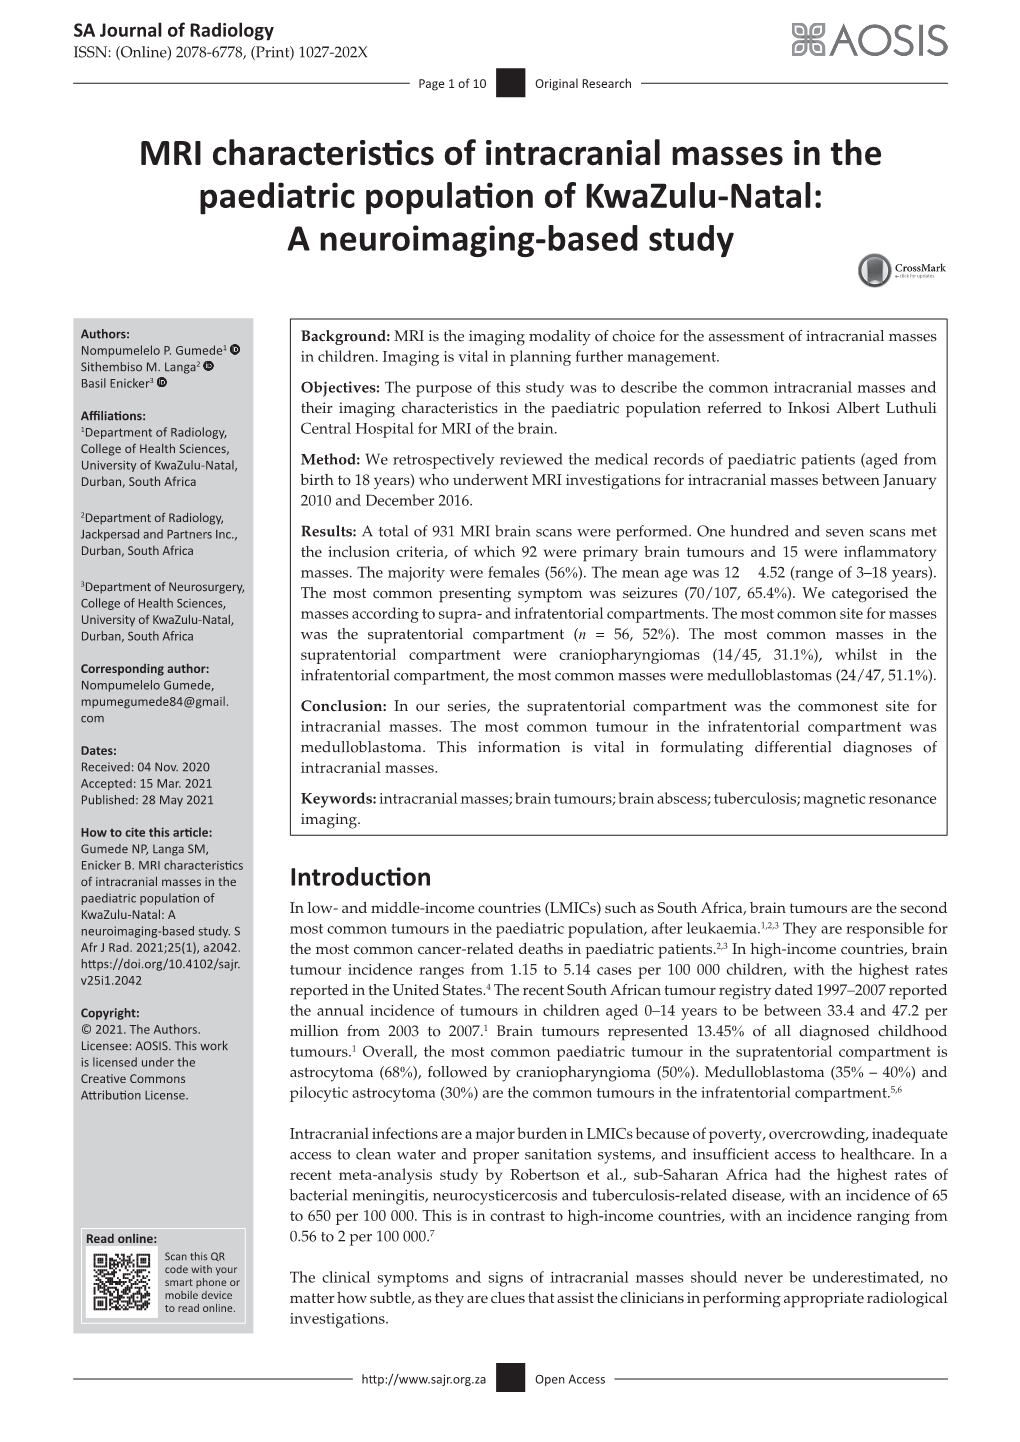 MRI Characteristics of Intracranial Masses in the Paediatric Population of Kwazulu-Natal: a Neuroimaging-Based Study